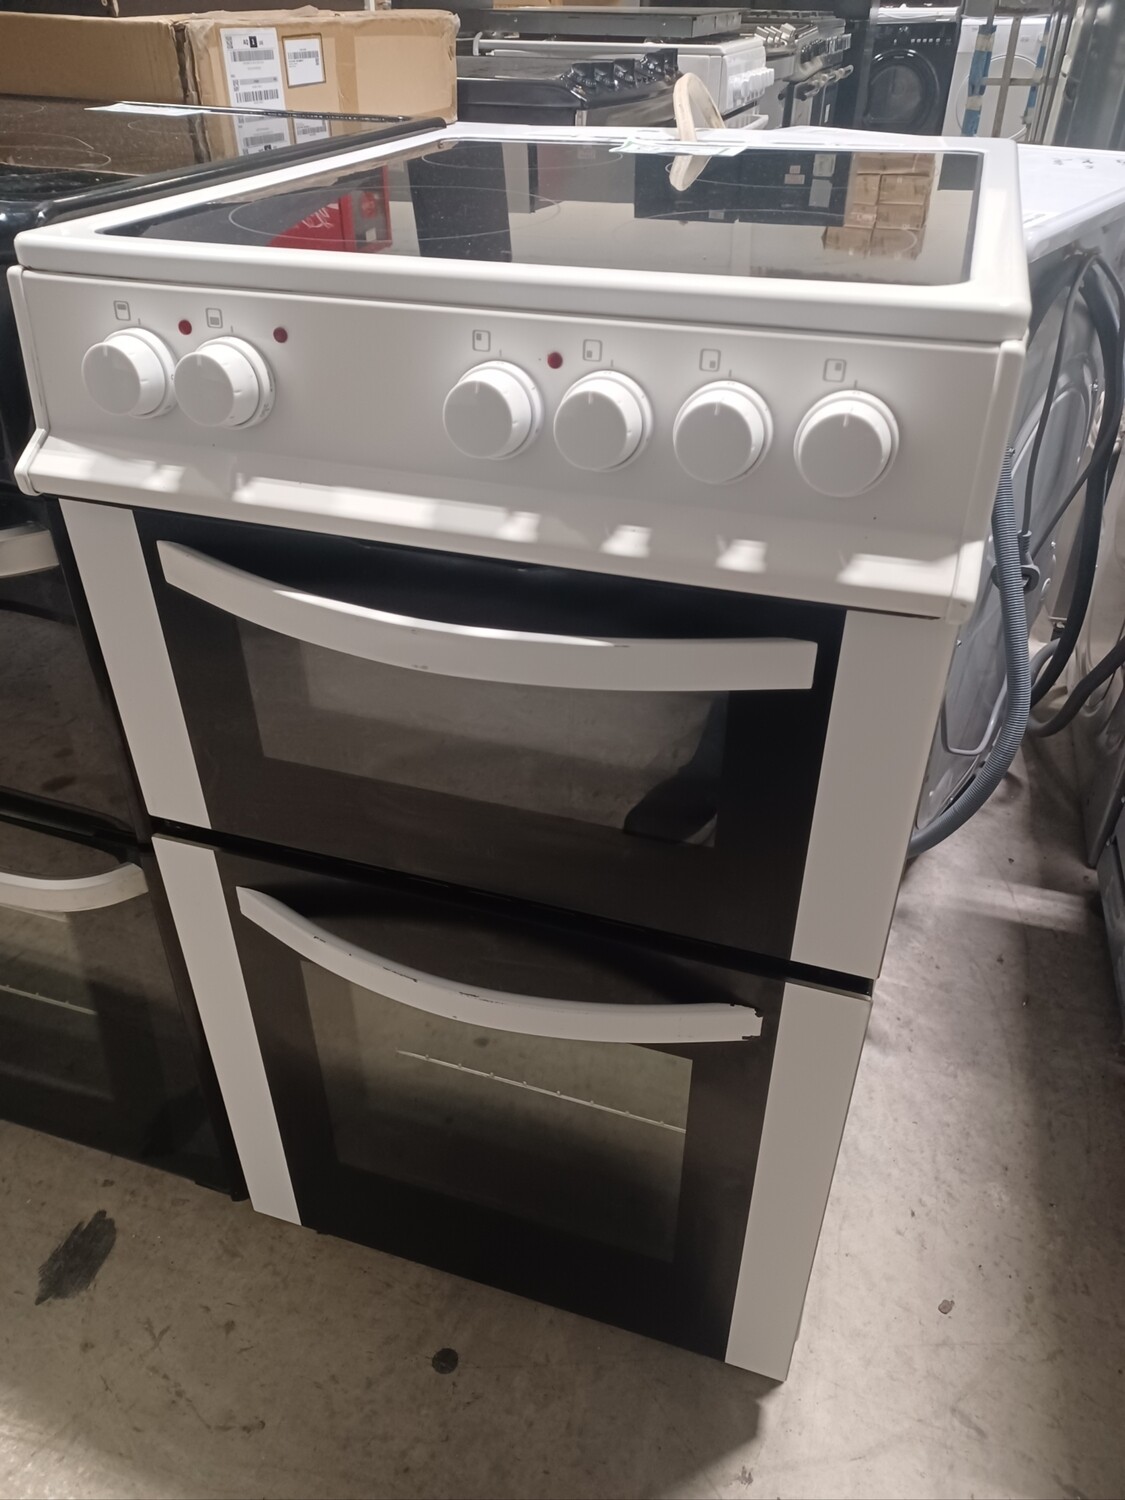 Logik 50cm Electric cooker Twin Cavity White - Refurbished + 6 month guarantee 